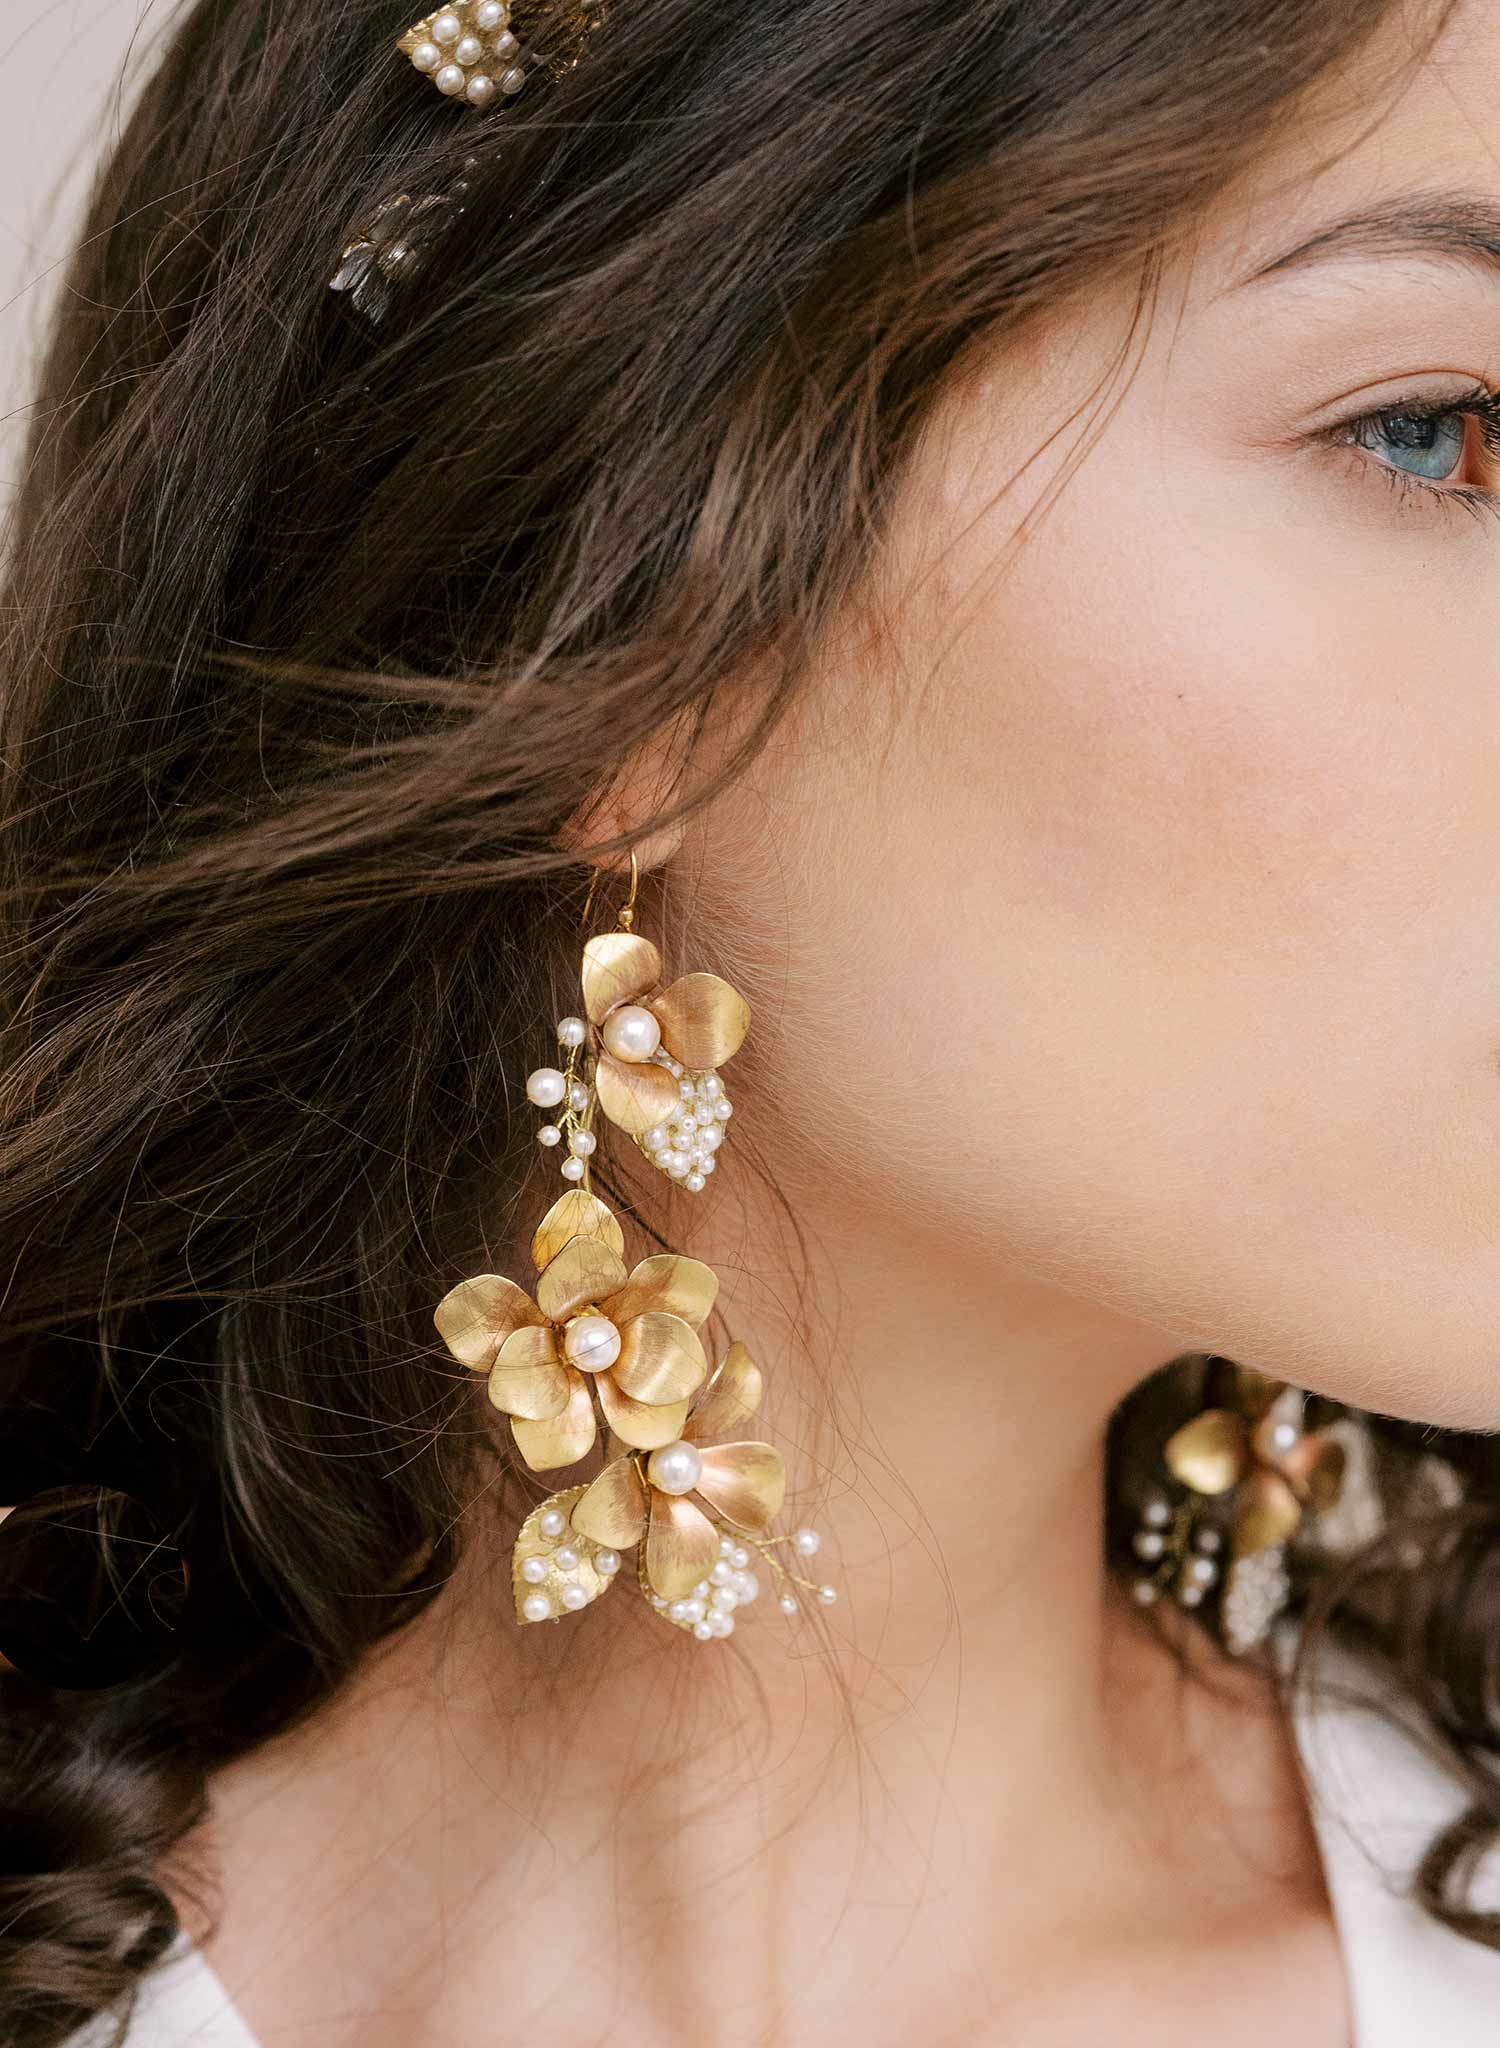 Blooming brass florals chandelier earrings - Style #2312